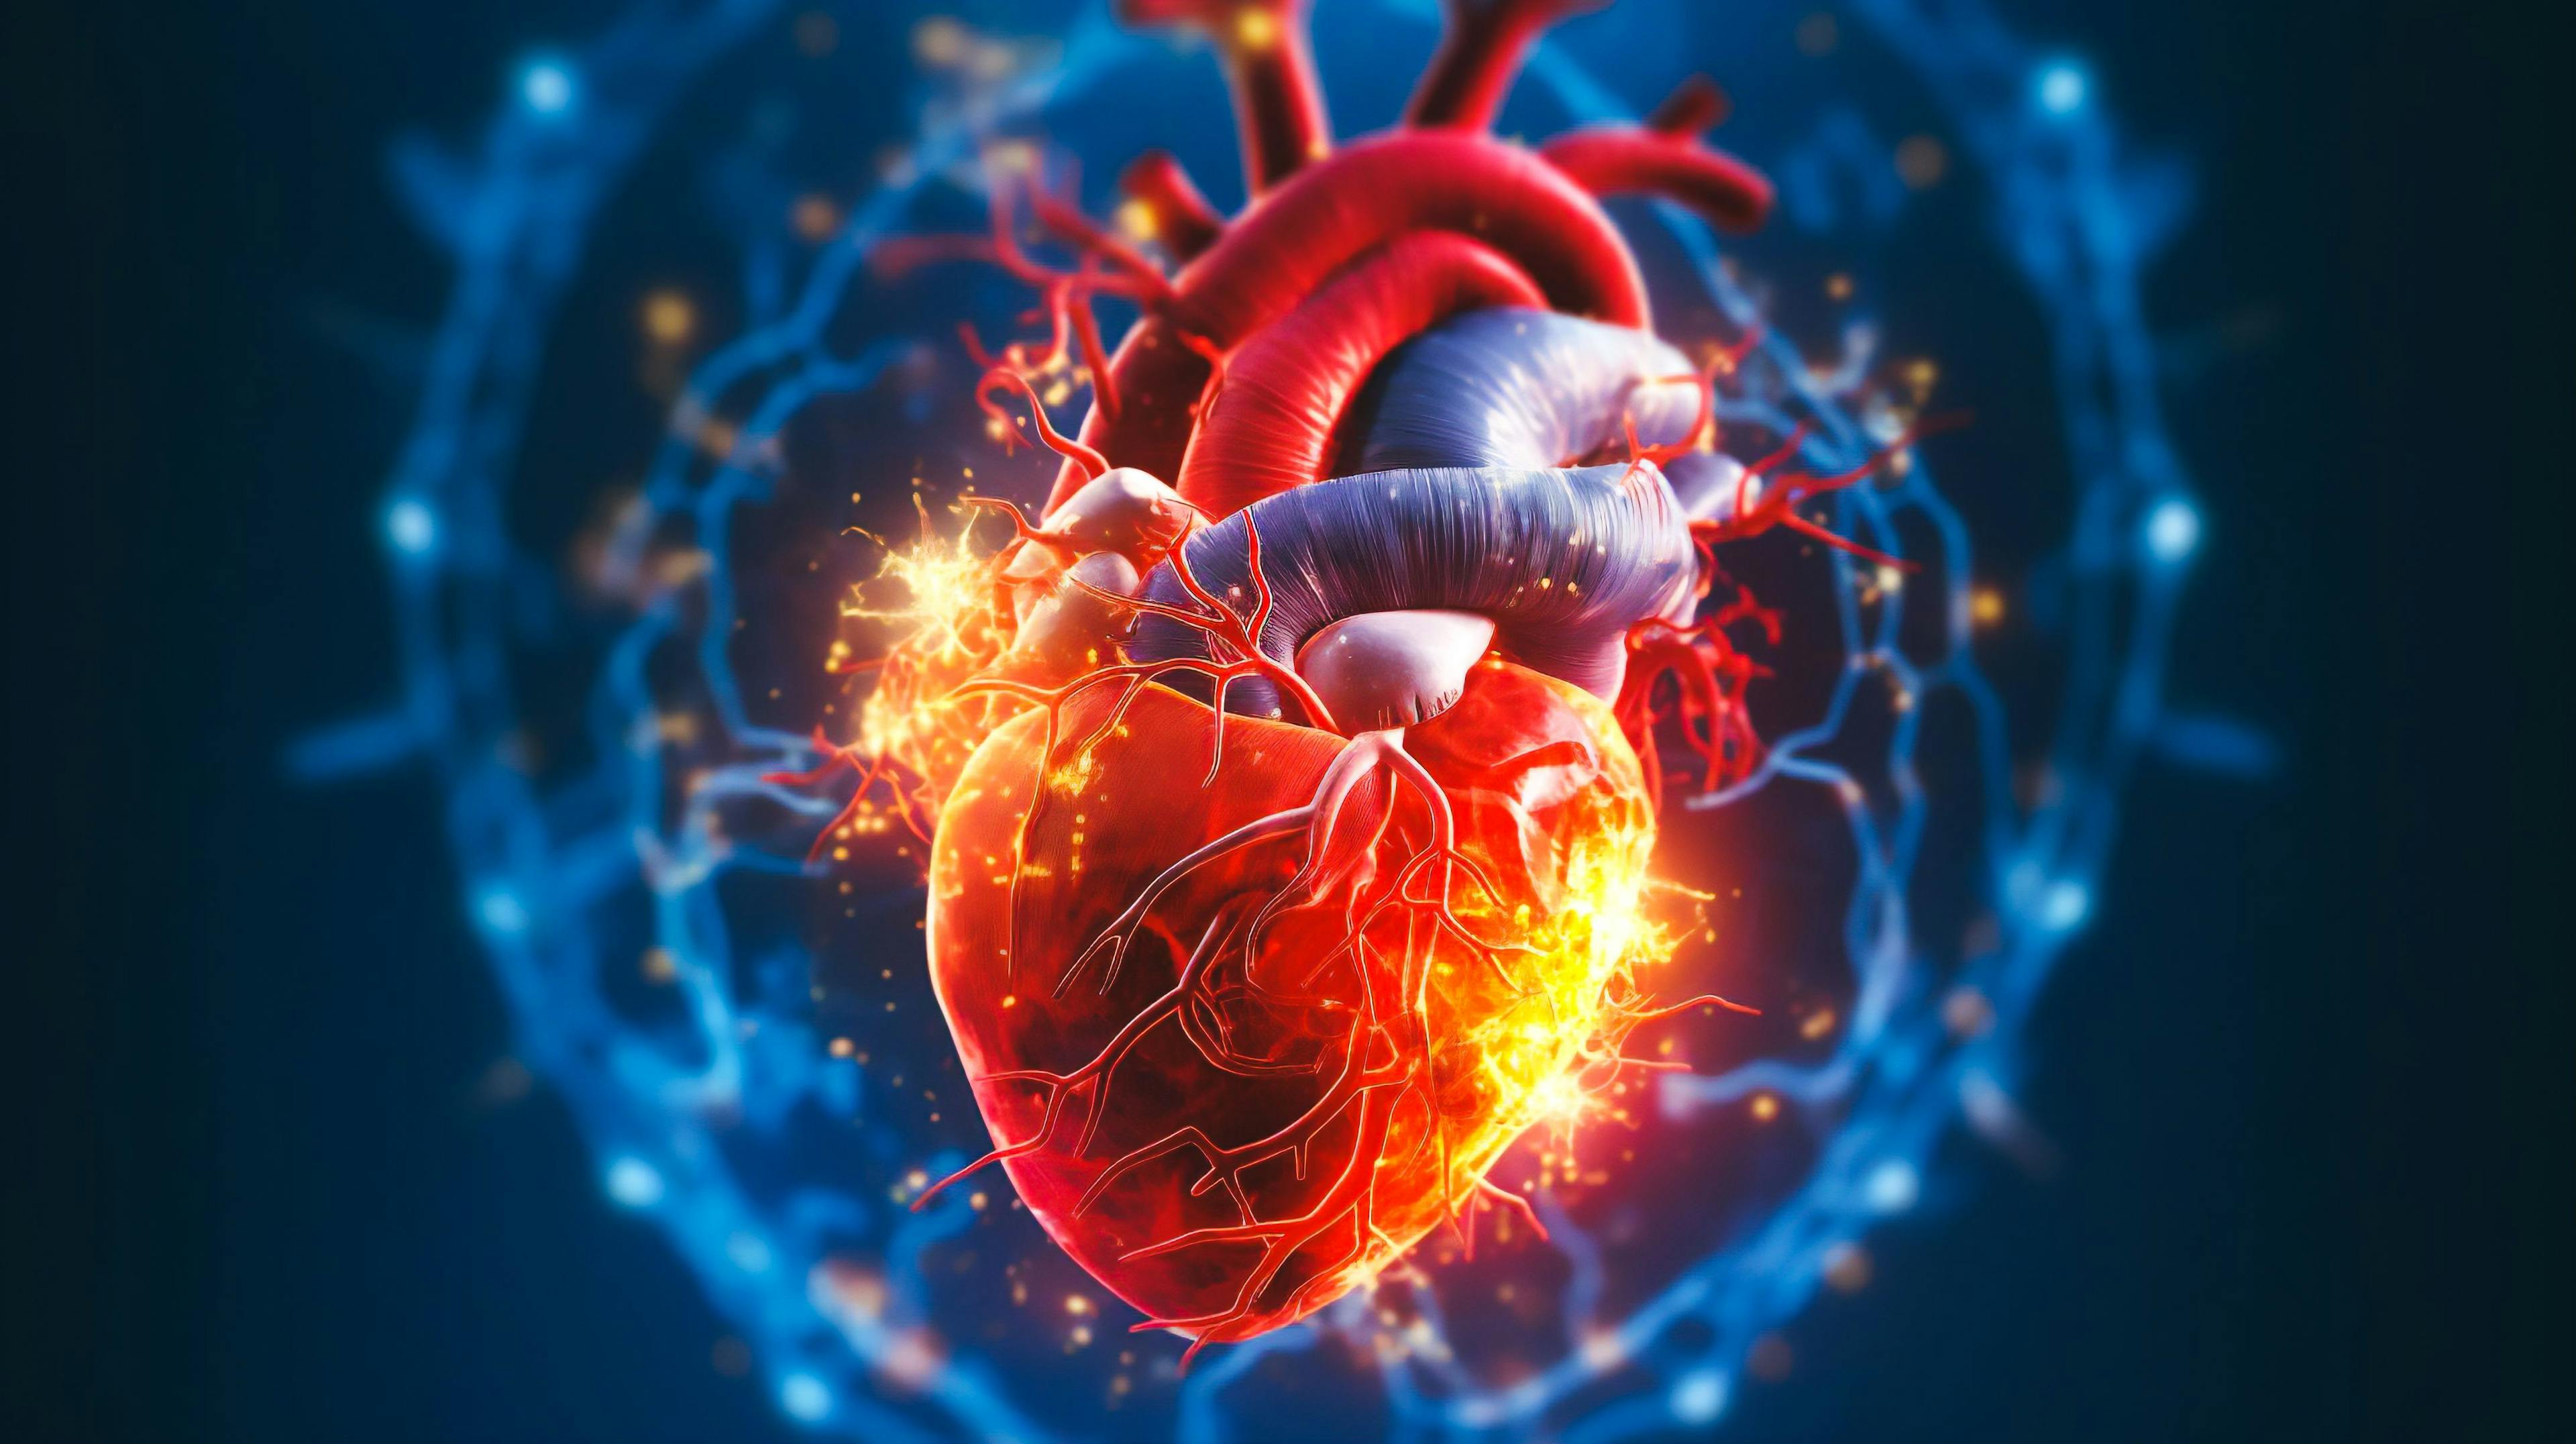 Cardiovascular Disease Concept | image credit: catalin - stock.adobe.com